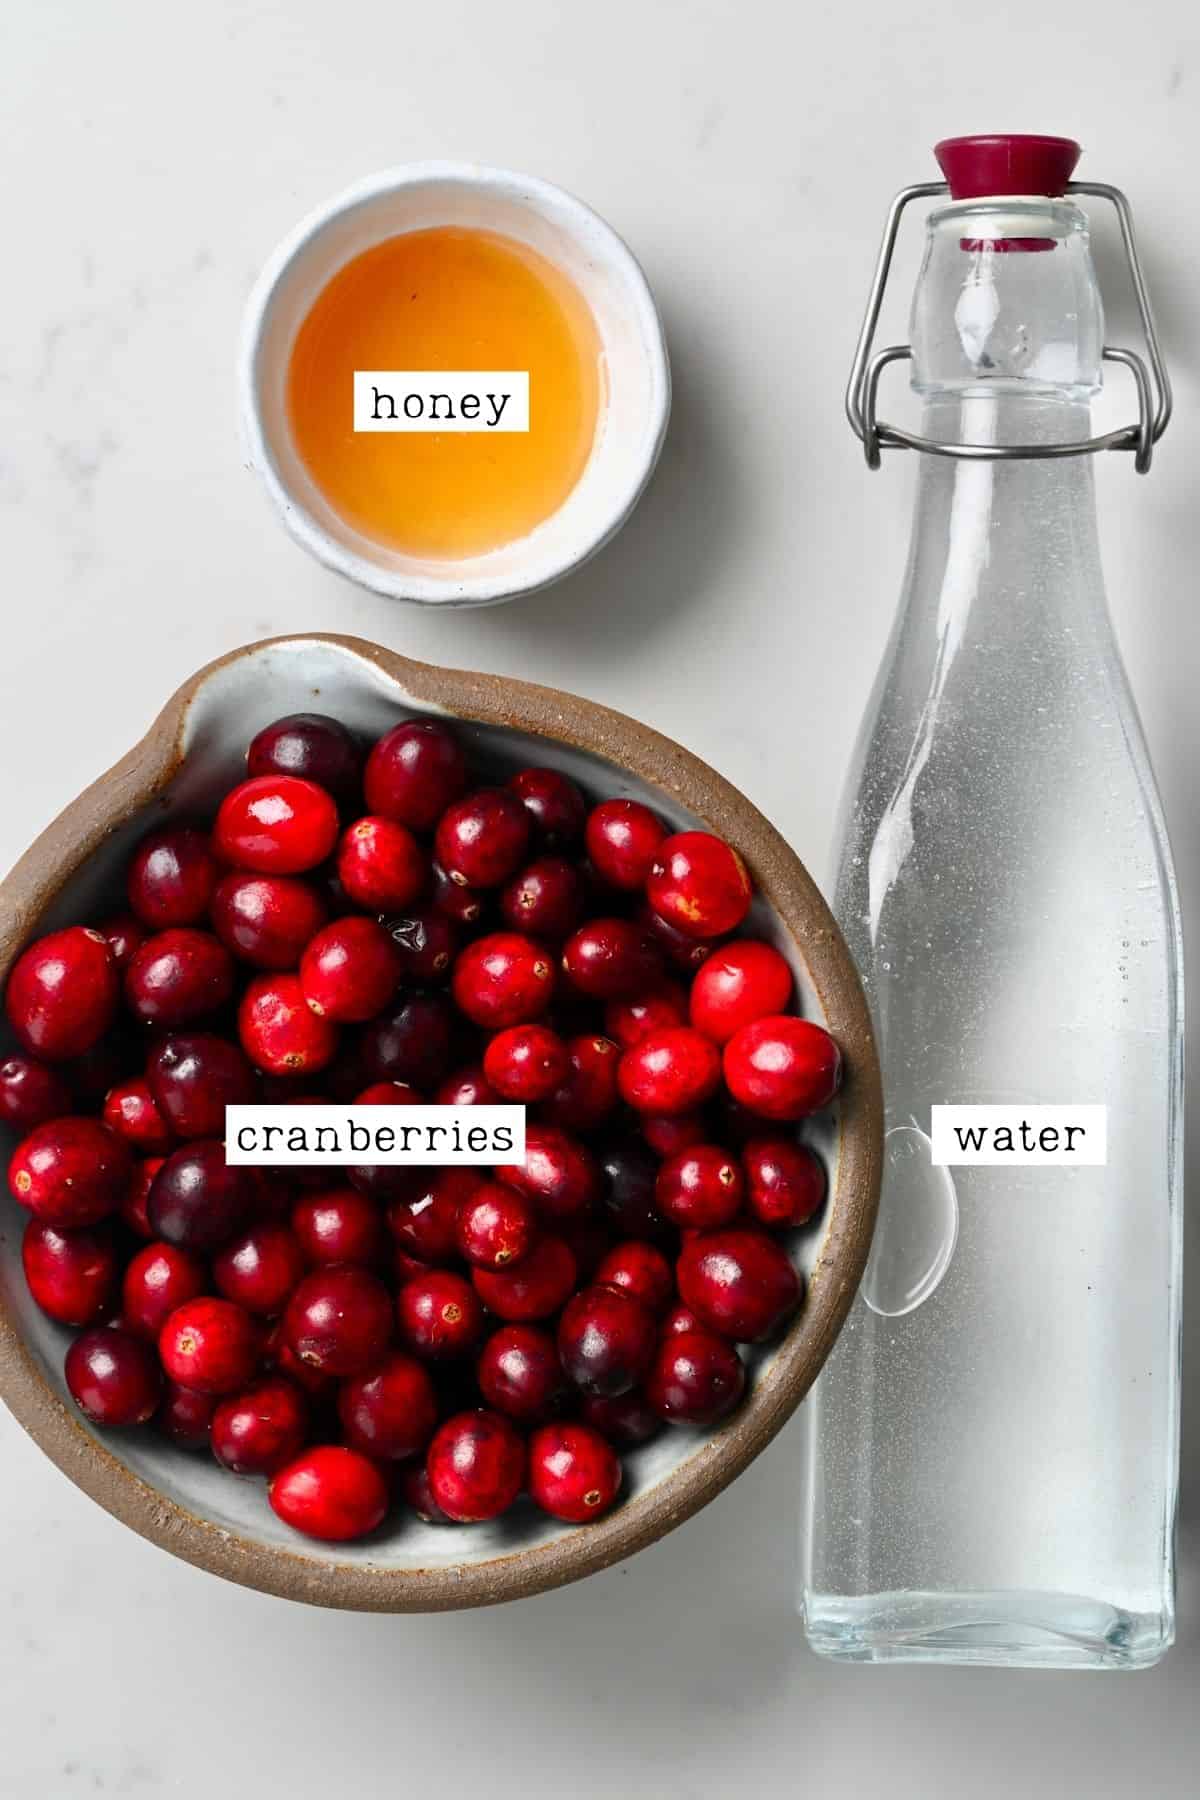 Ingredients for cranberry juice